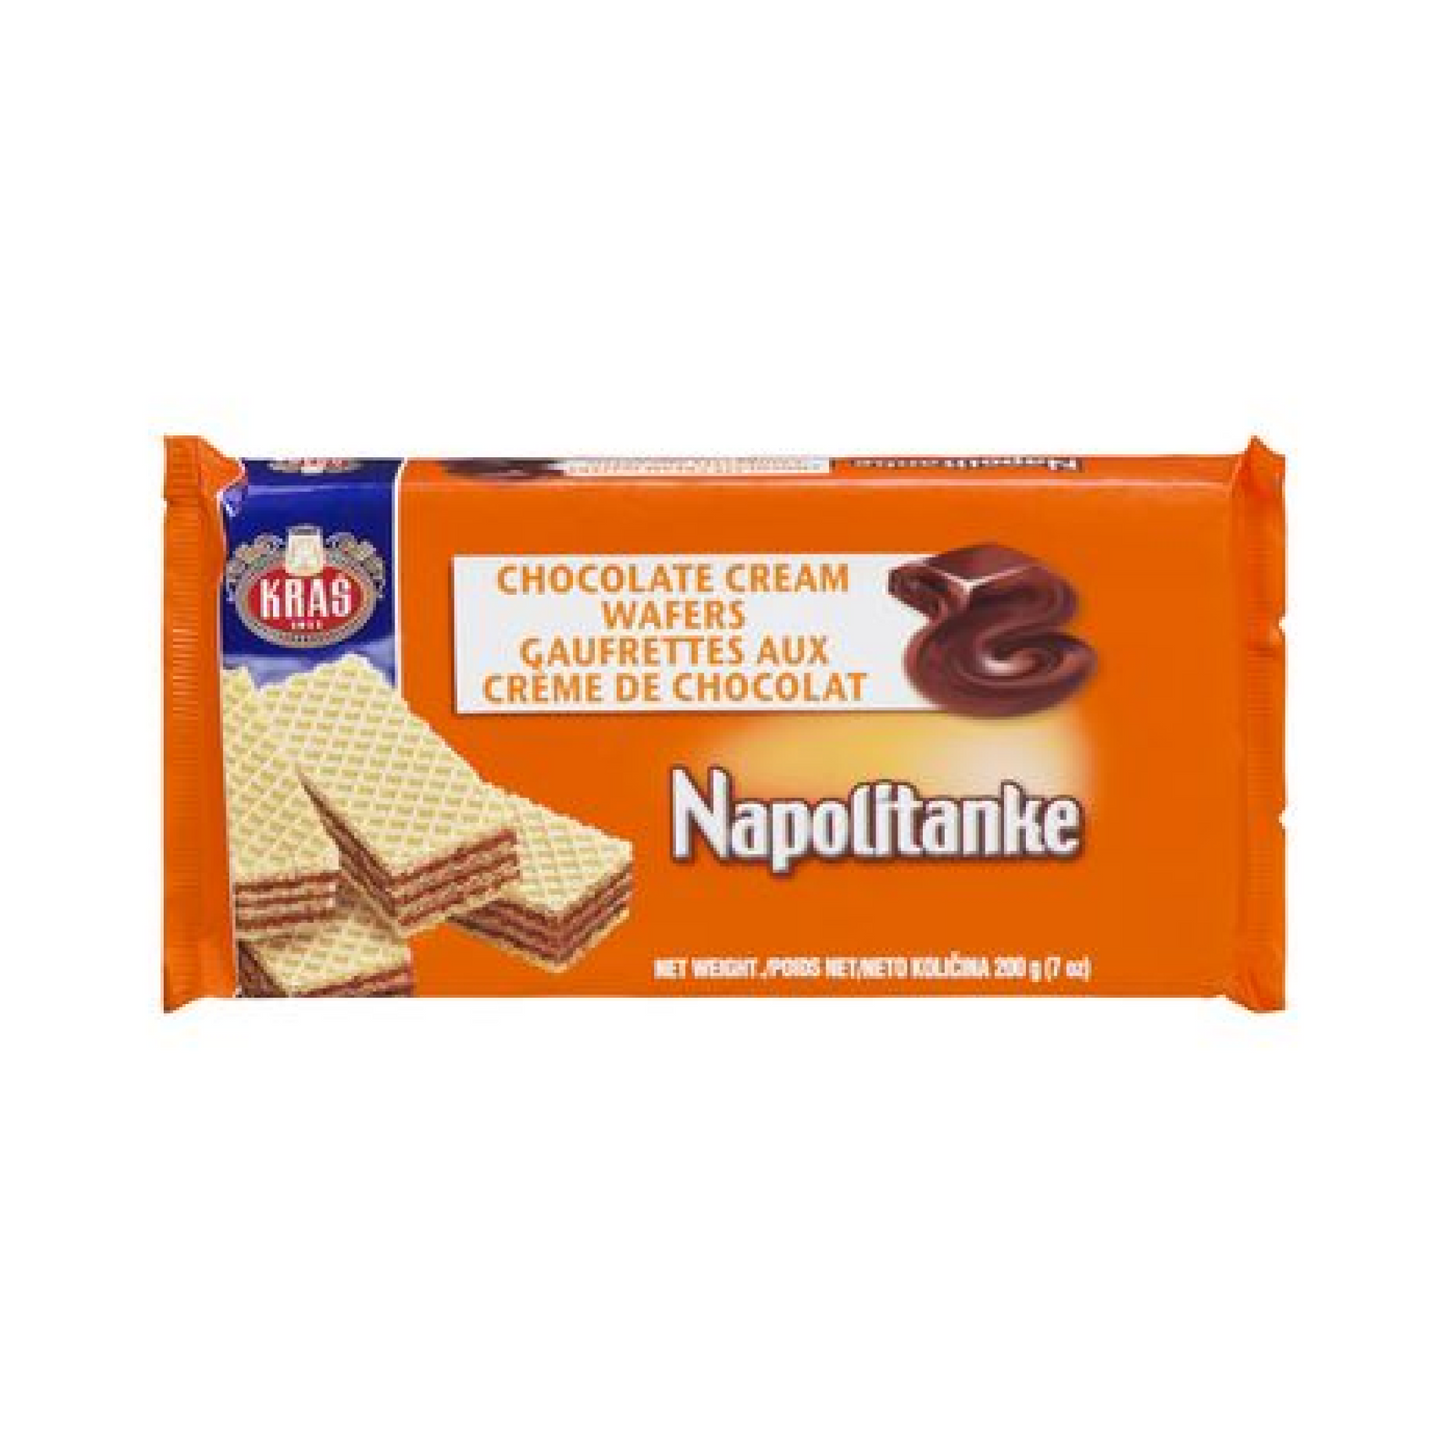 Kras Chocolate Cream Wafers Napolitanke 200g